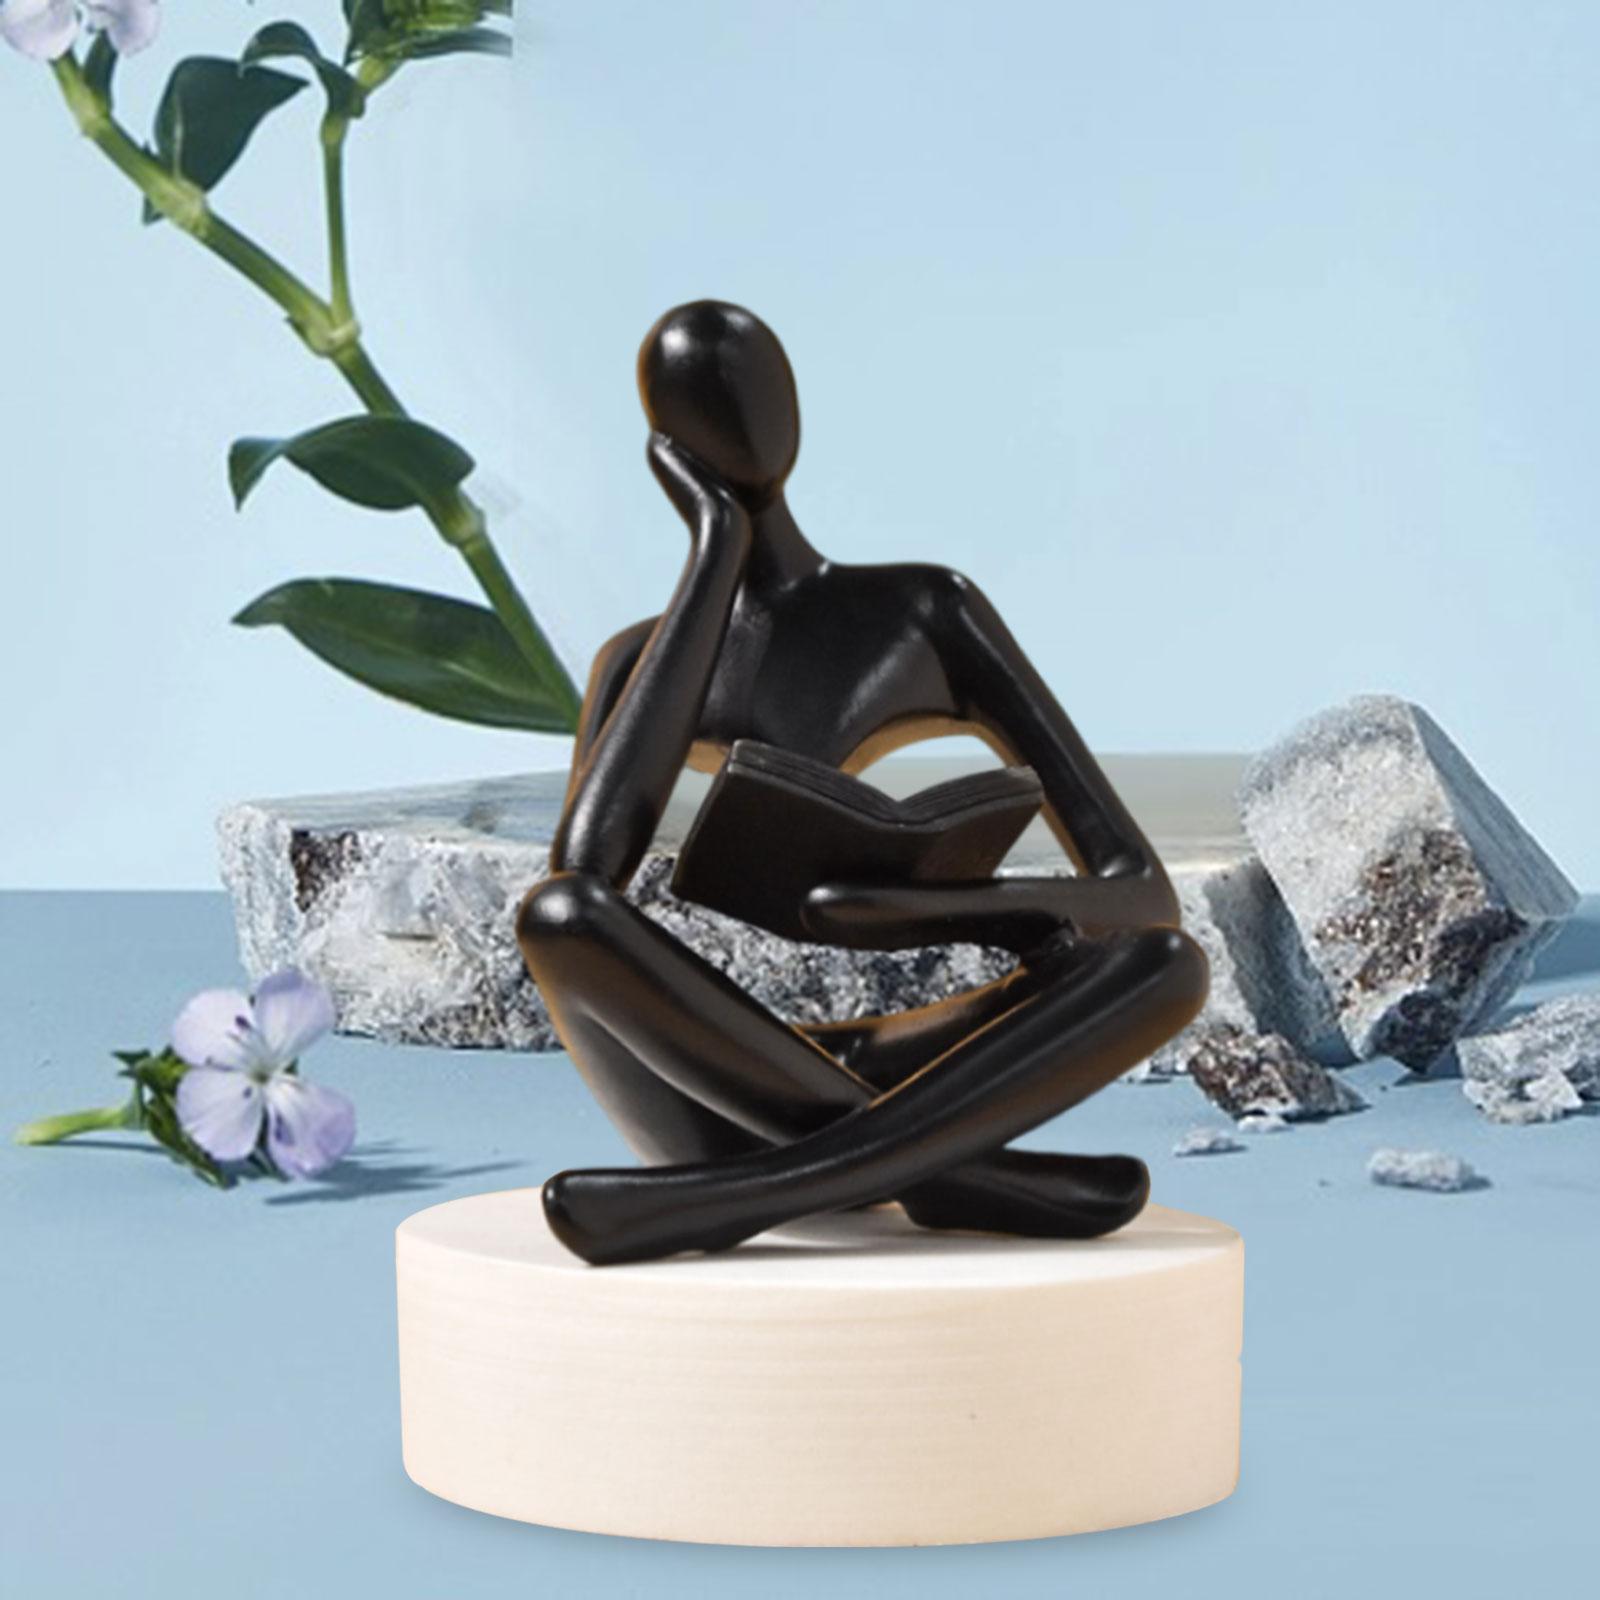 Figurine Human Figurine Figures Thinker Statue for Desktop Shelf Living Room 8.5cmx6cmx11.5cm Black